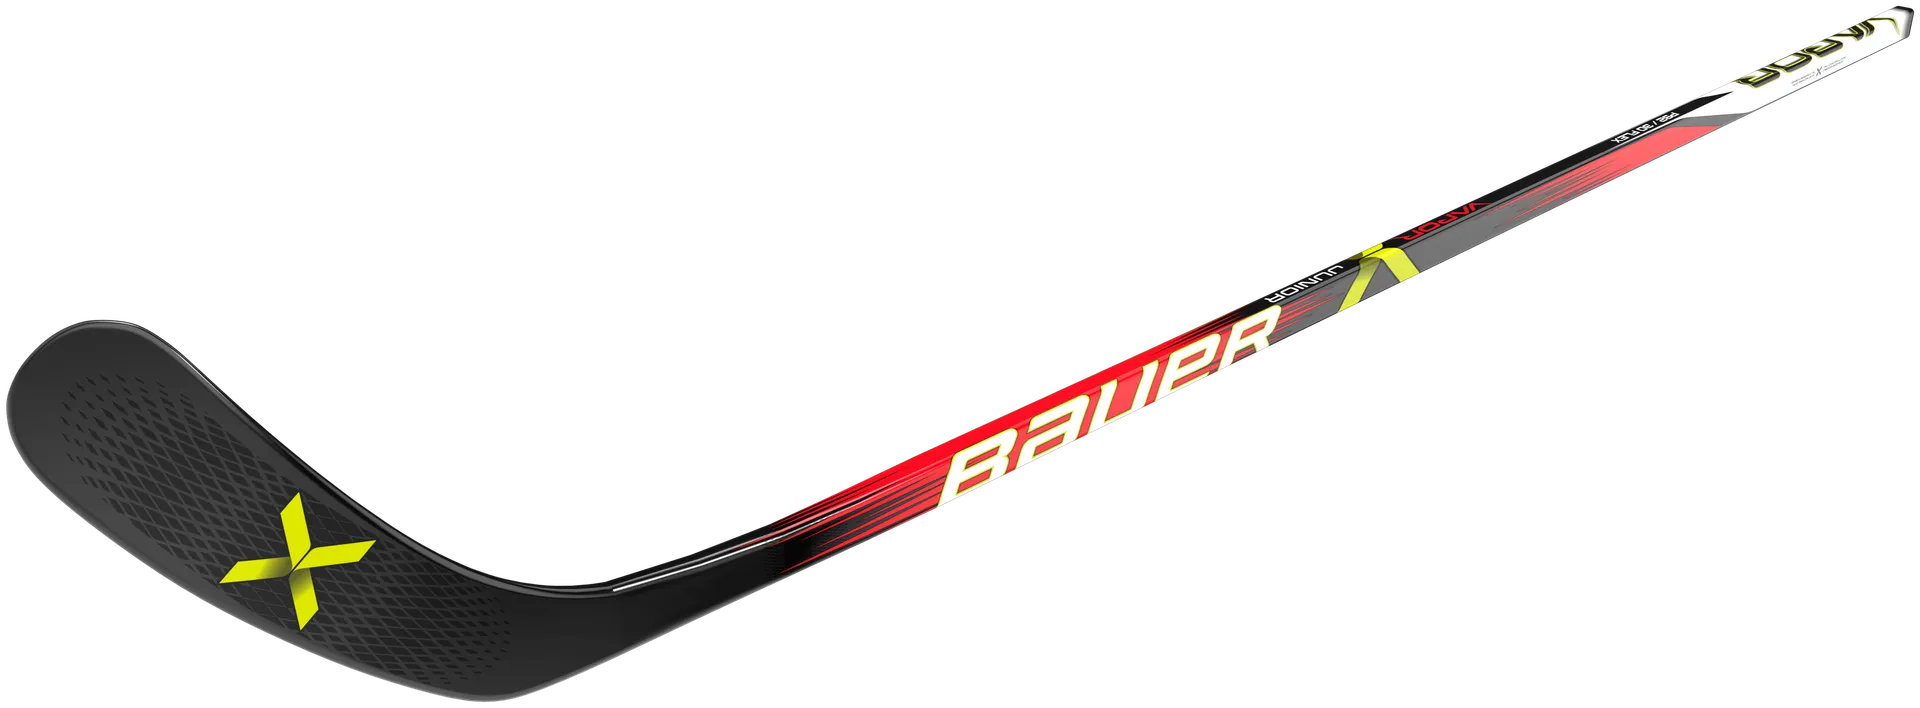 Bauer nuorten jääkiekkomaila S23 Vapor Junior Grip STK-30 (50") Right - 4